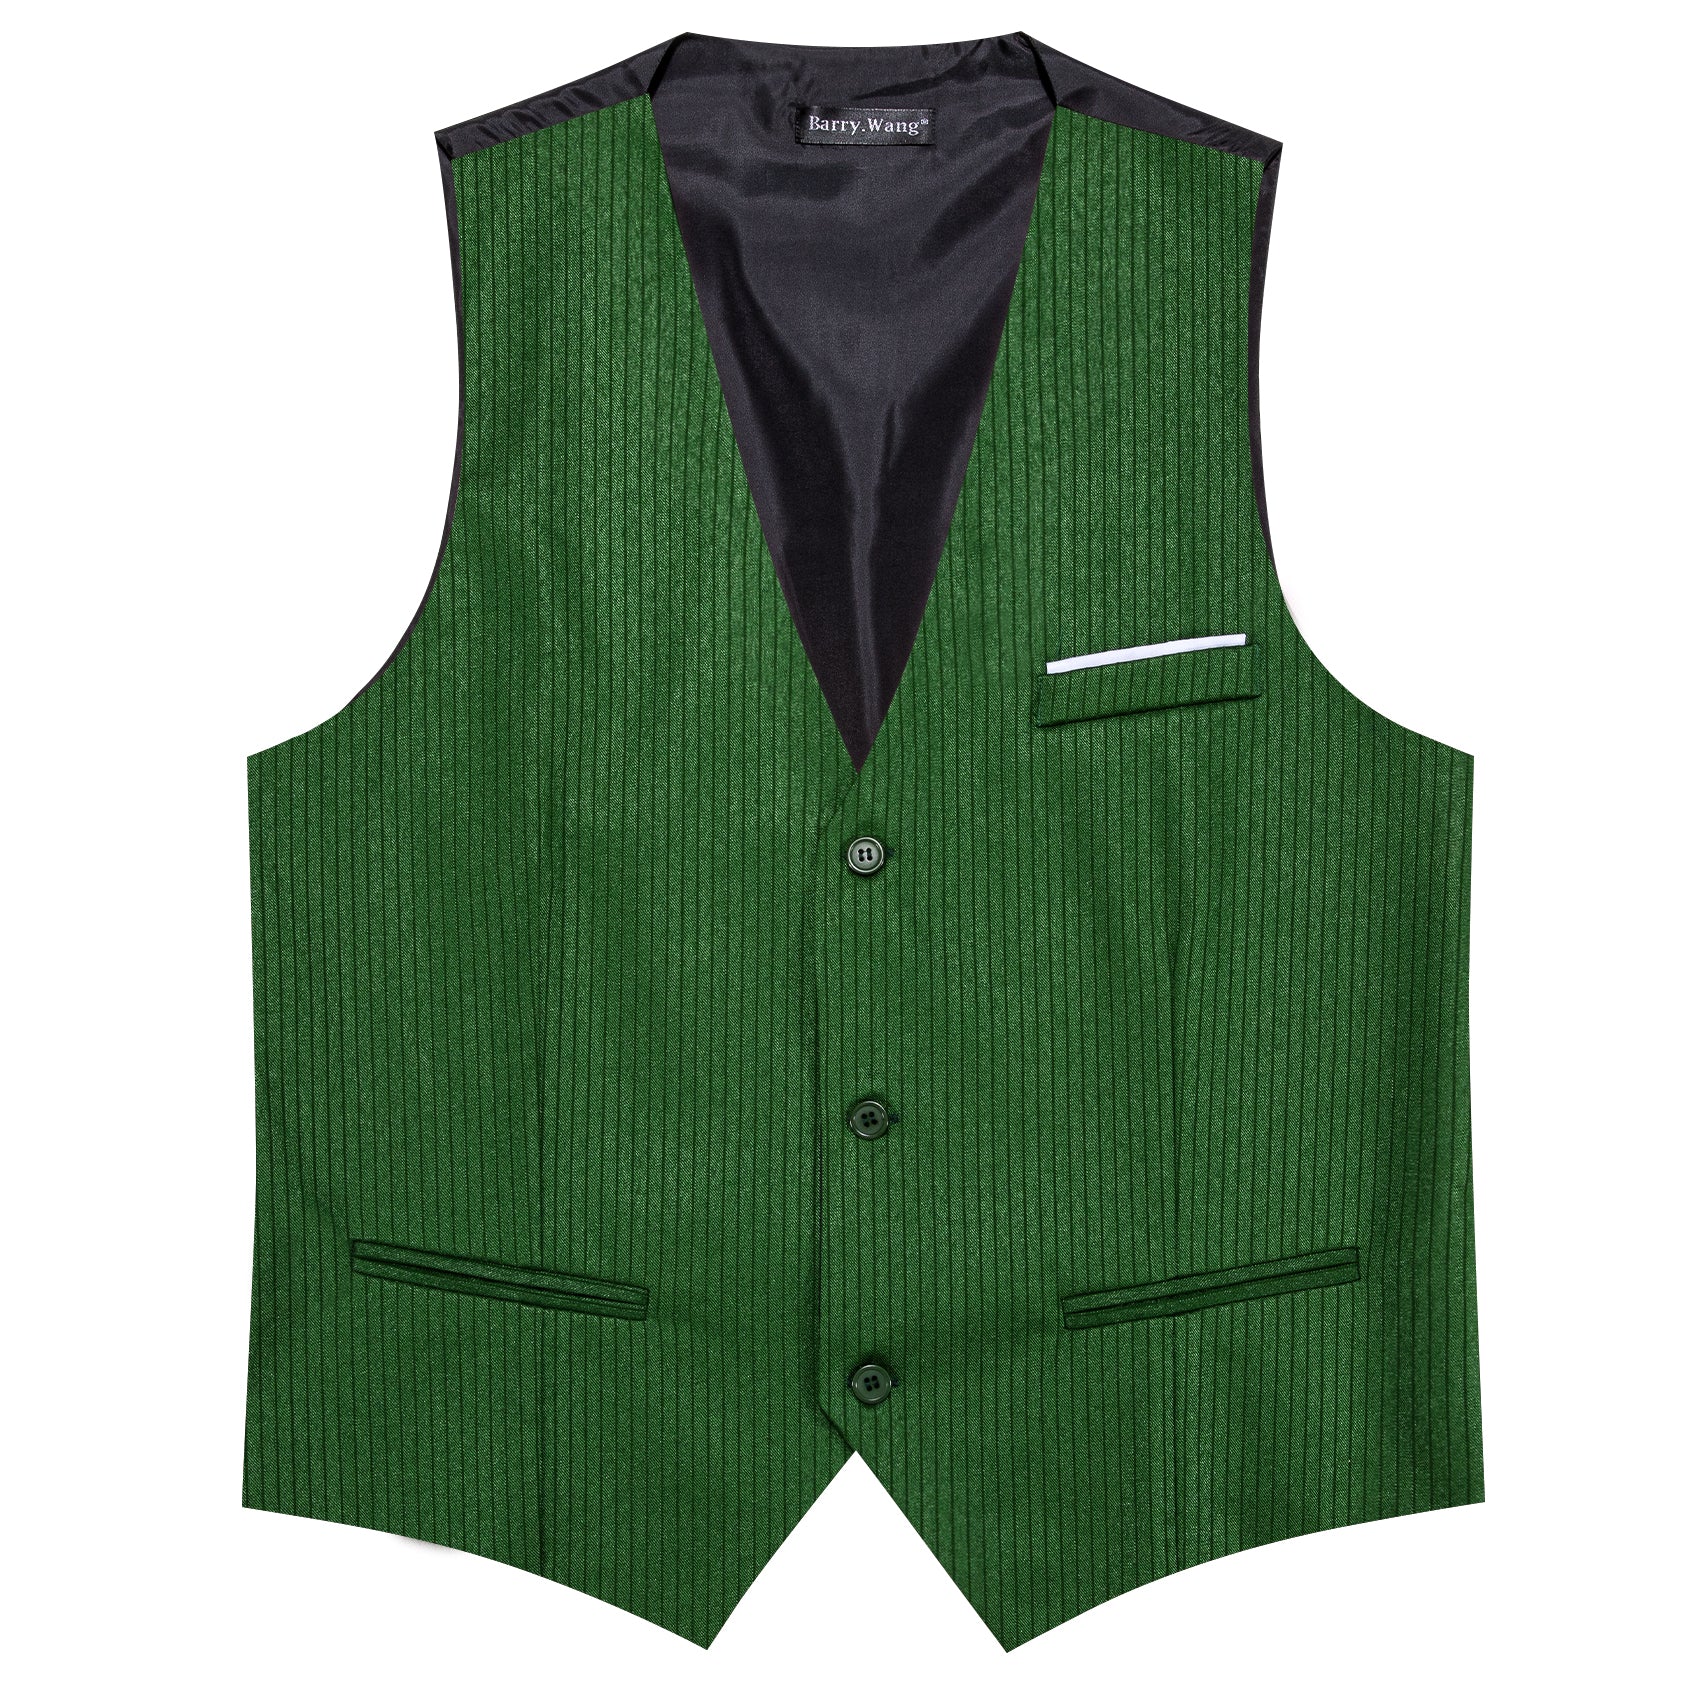 Barry.wang Men's Vest Grass Green Solid Business Suit Waistcoat Vest